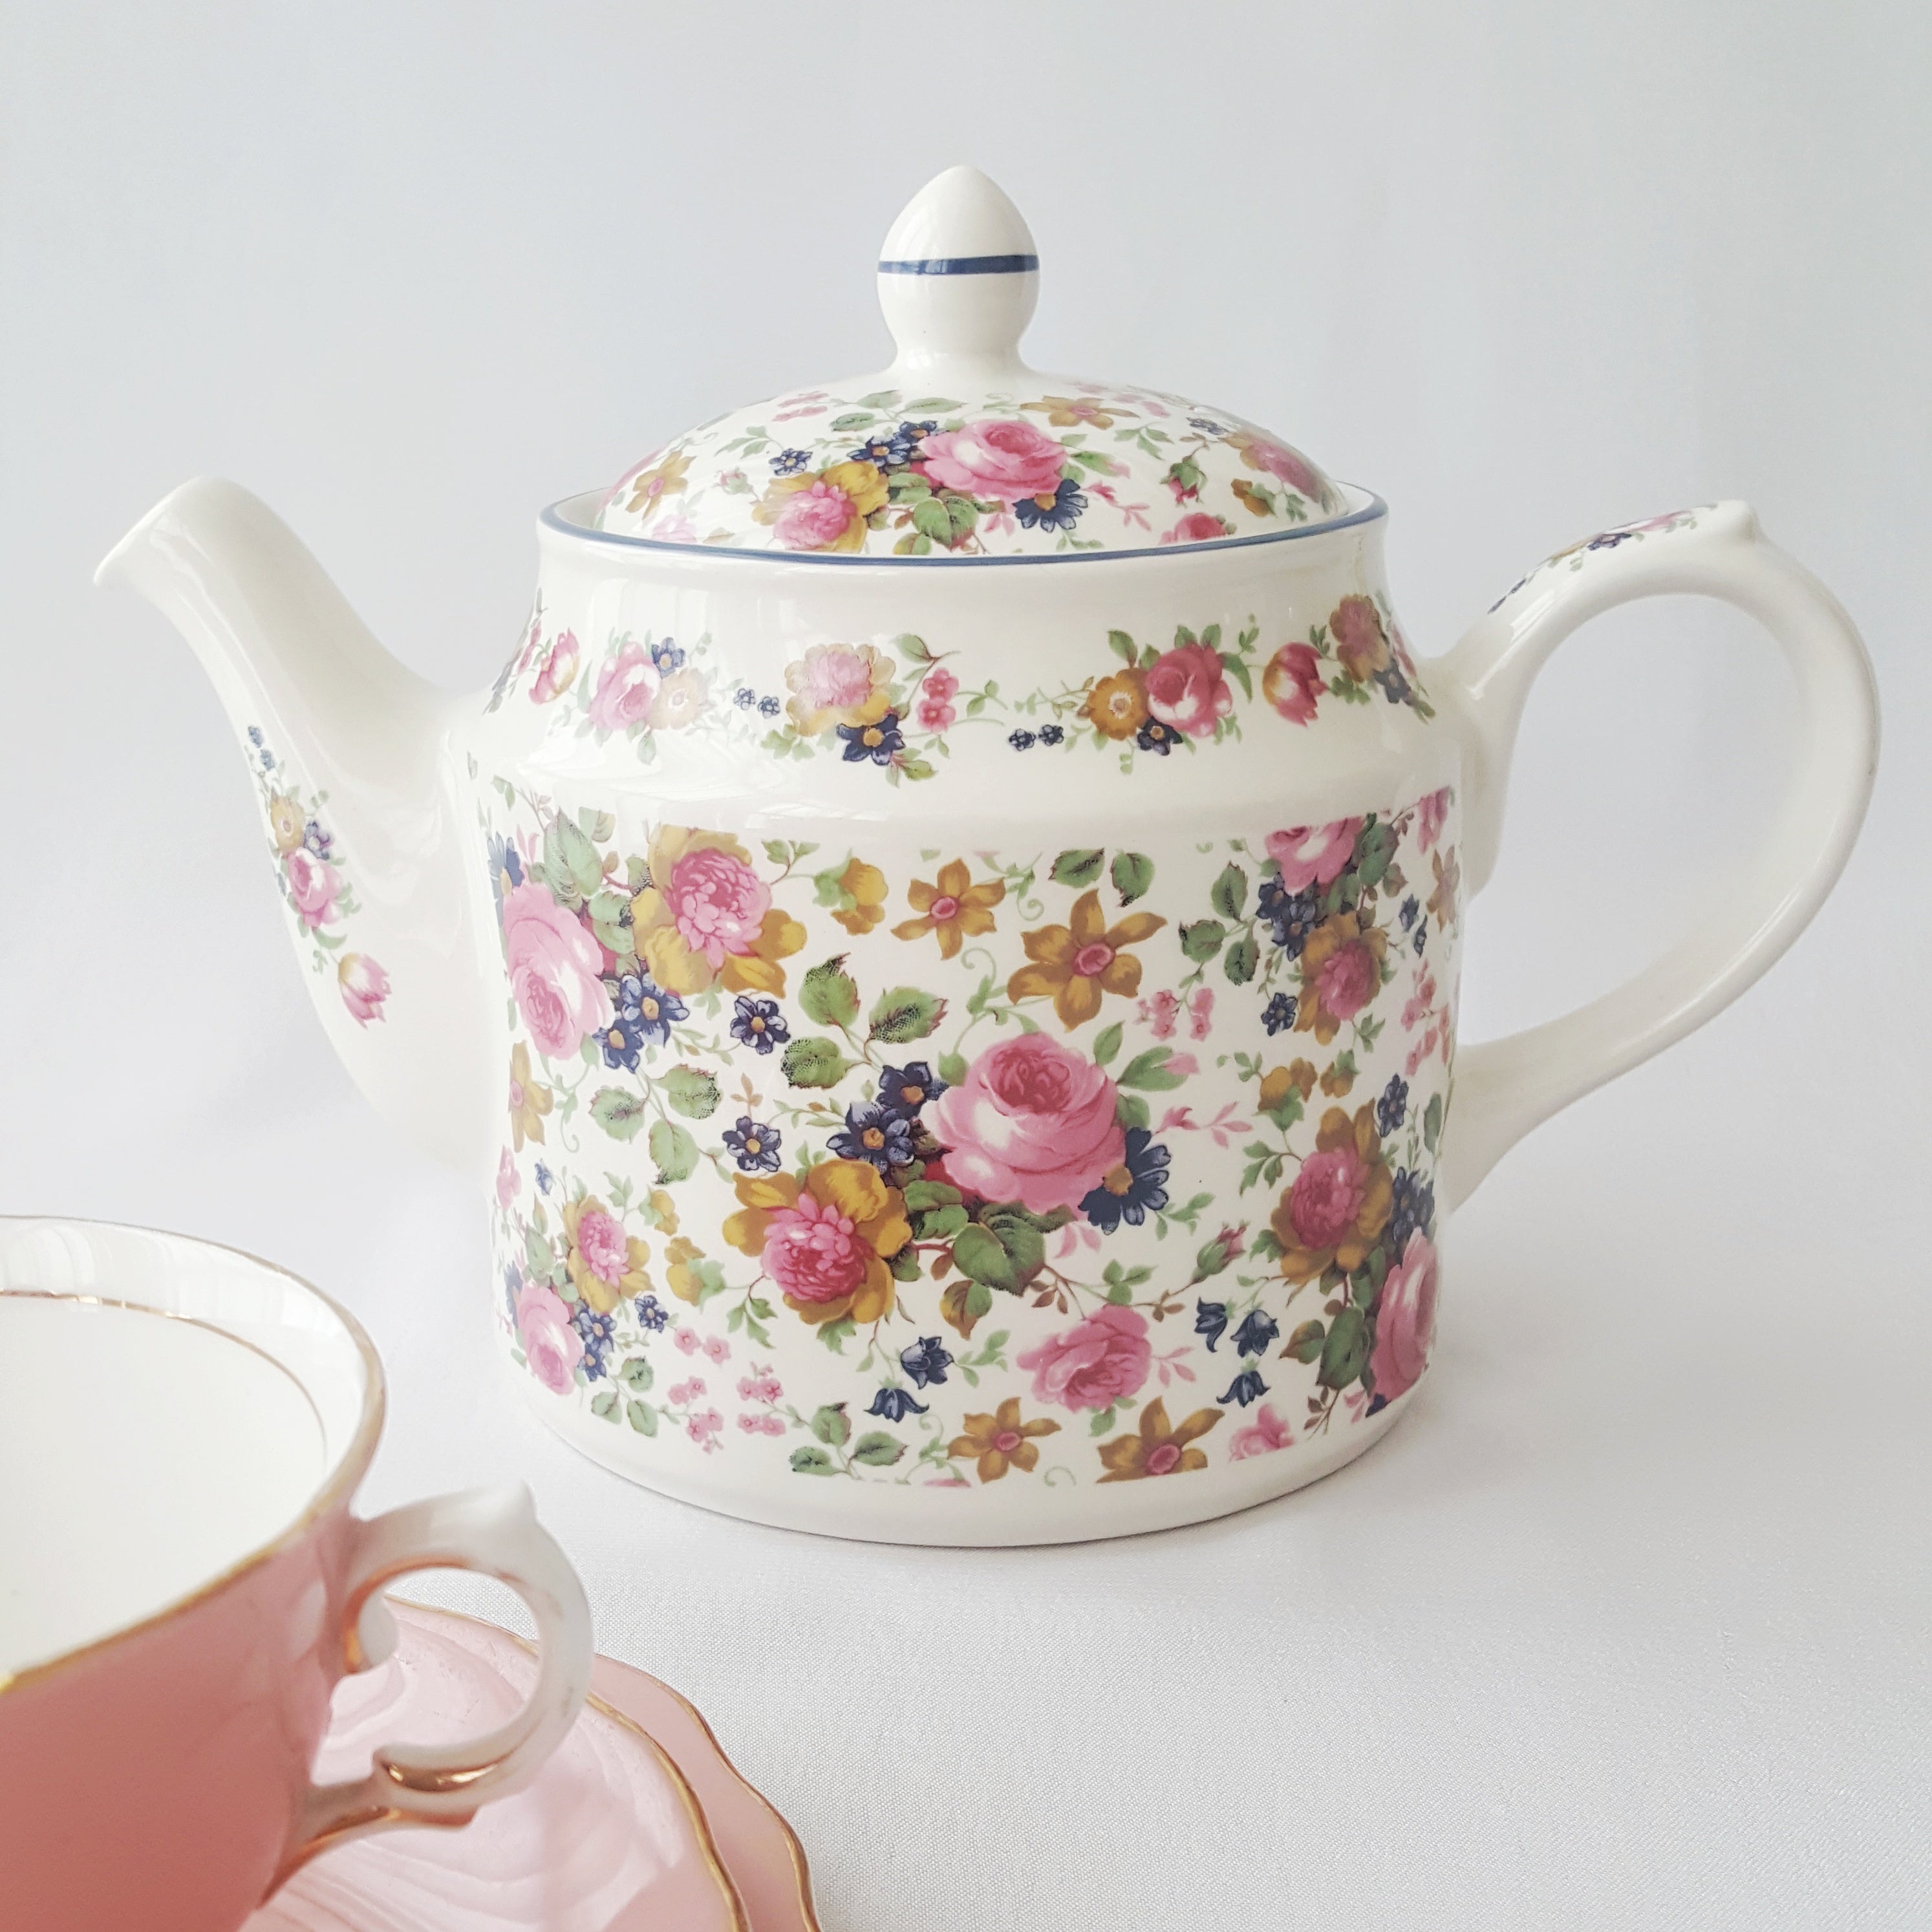 1980s Sadler Teapot in 'Olde Chintz' pattern, Full size, Made in